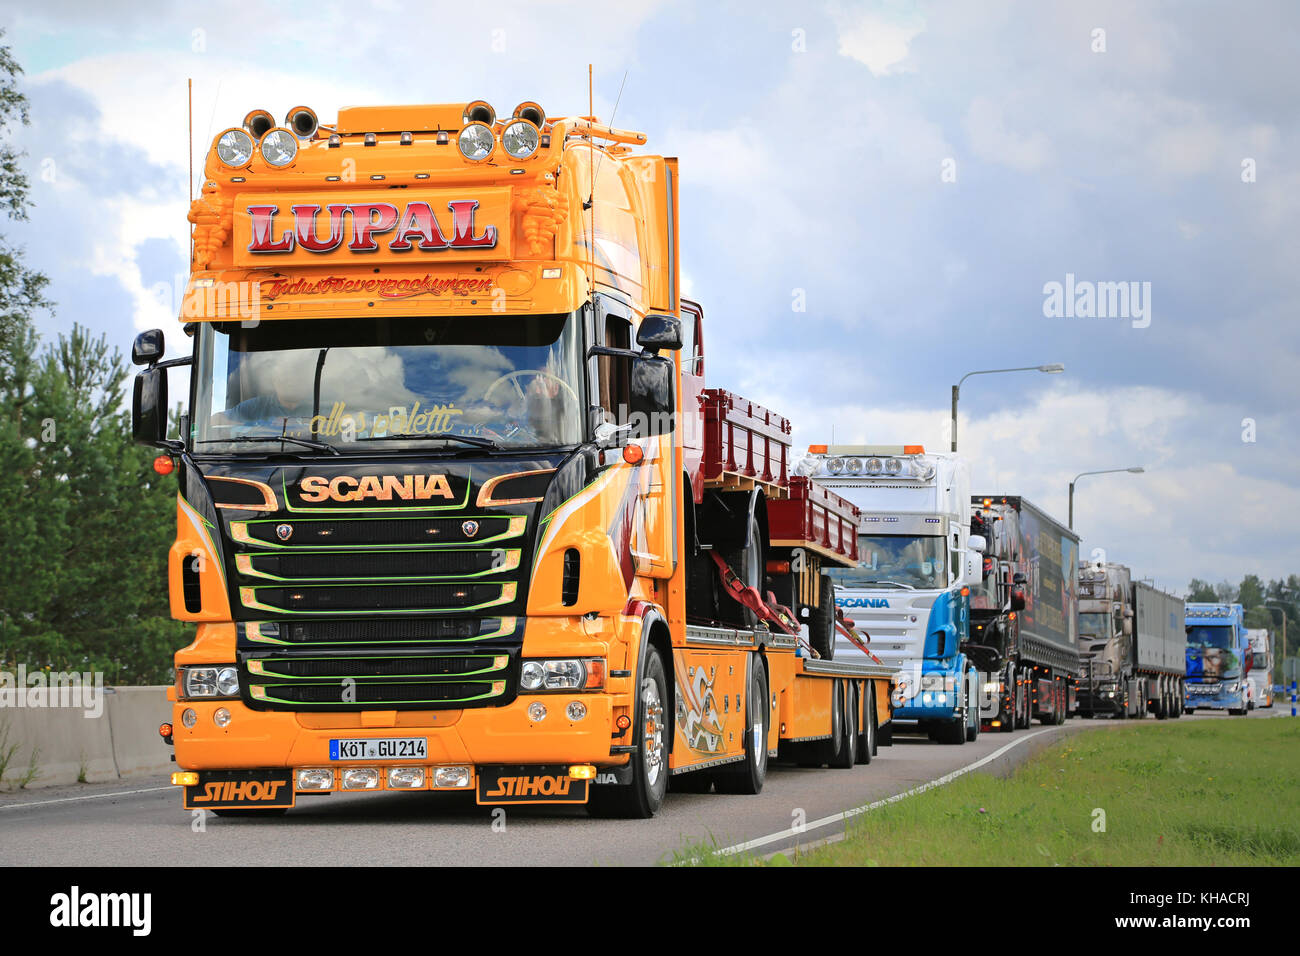 Berthons Scania V8 Vikings on Truck Convoy Editorial Photo - Image